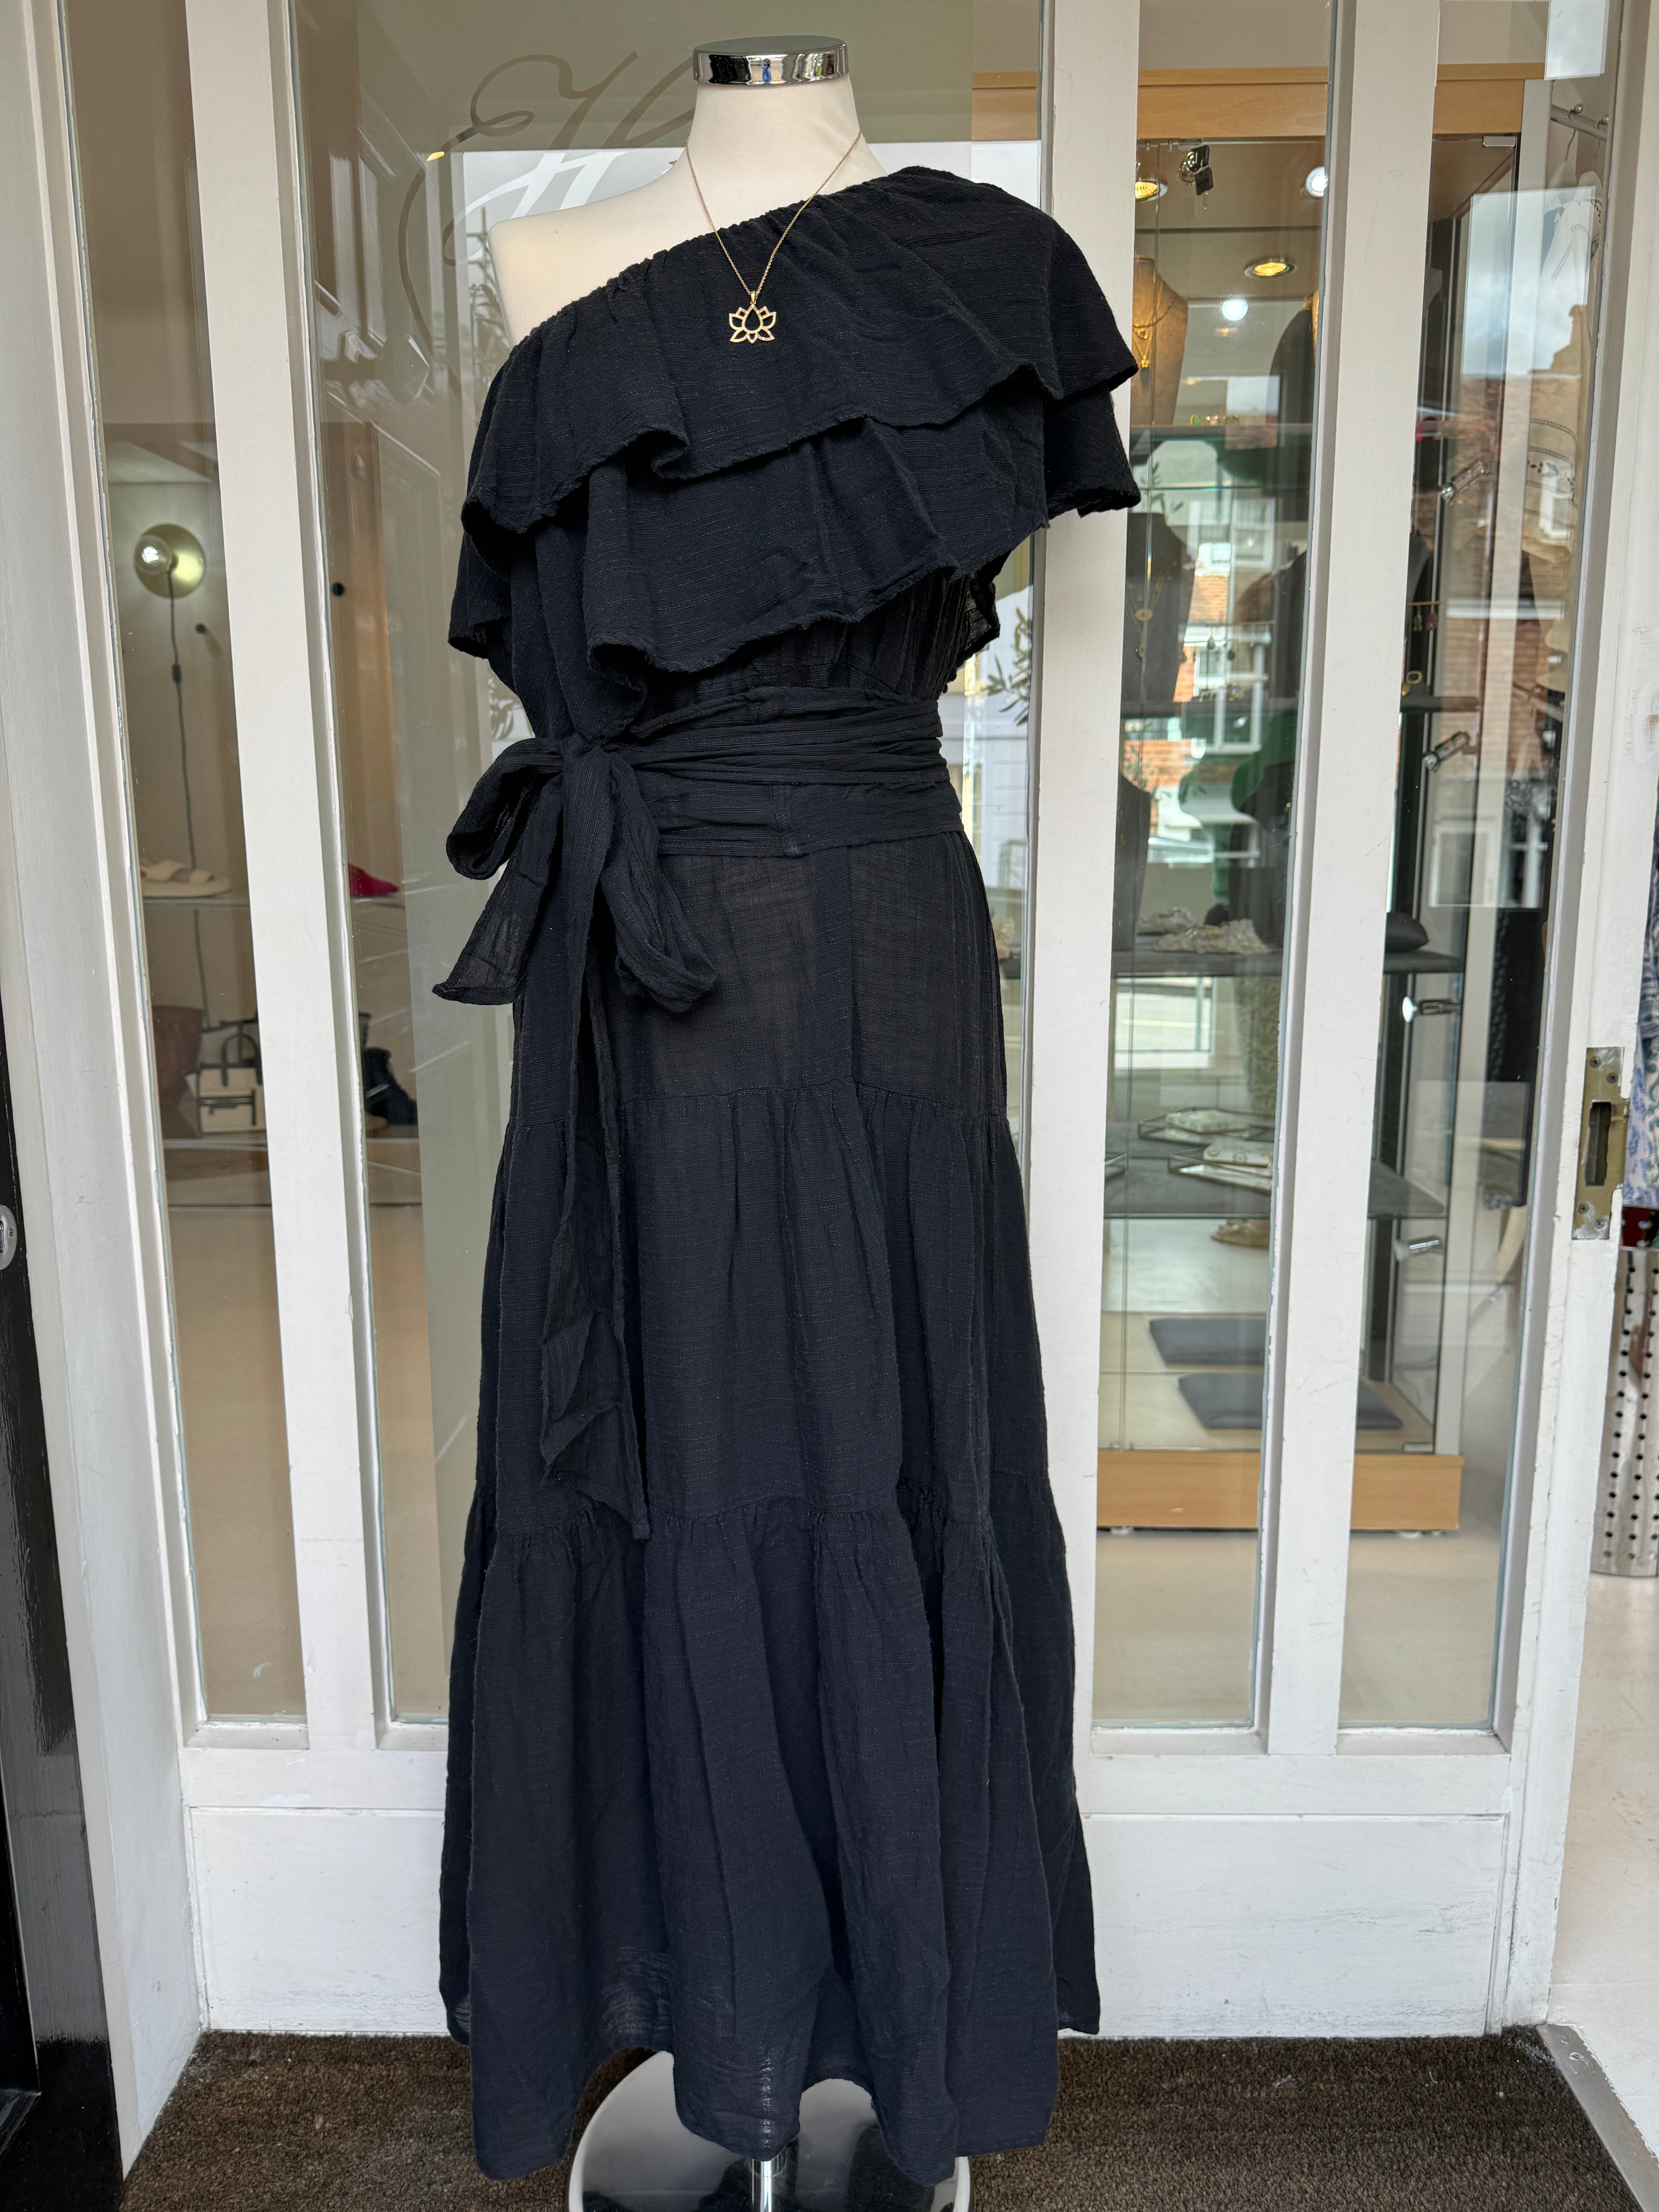 Hetre Alresford Hampshire Clothes Store Pearl & Caviar Black Frill Dress